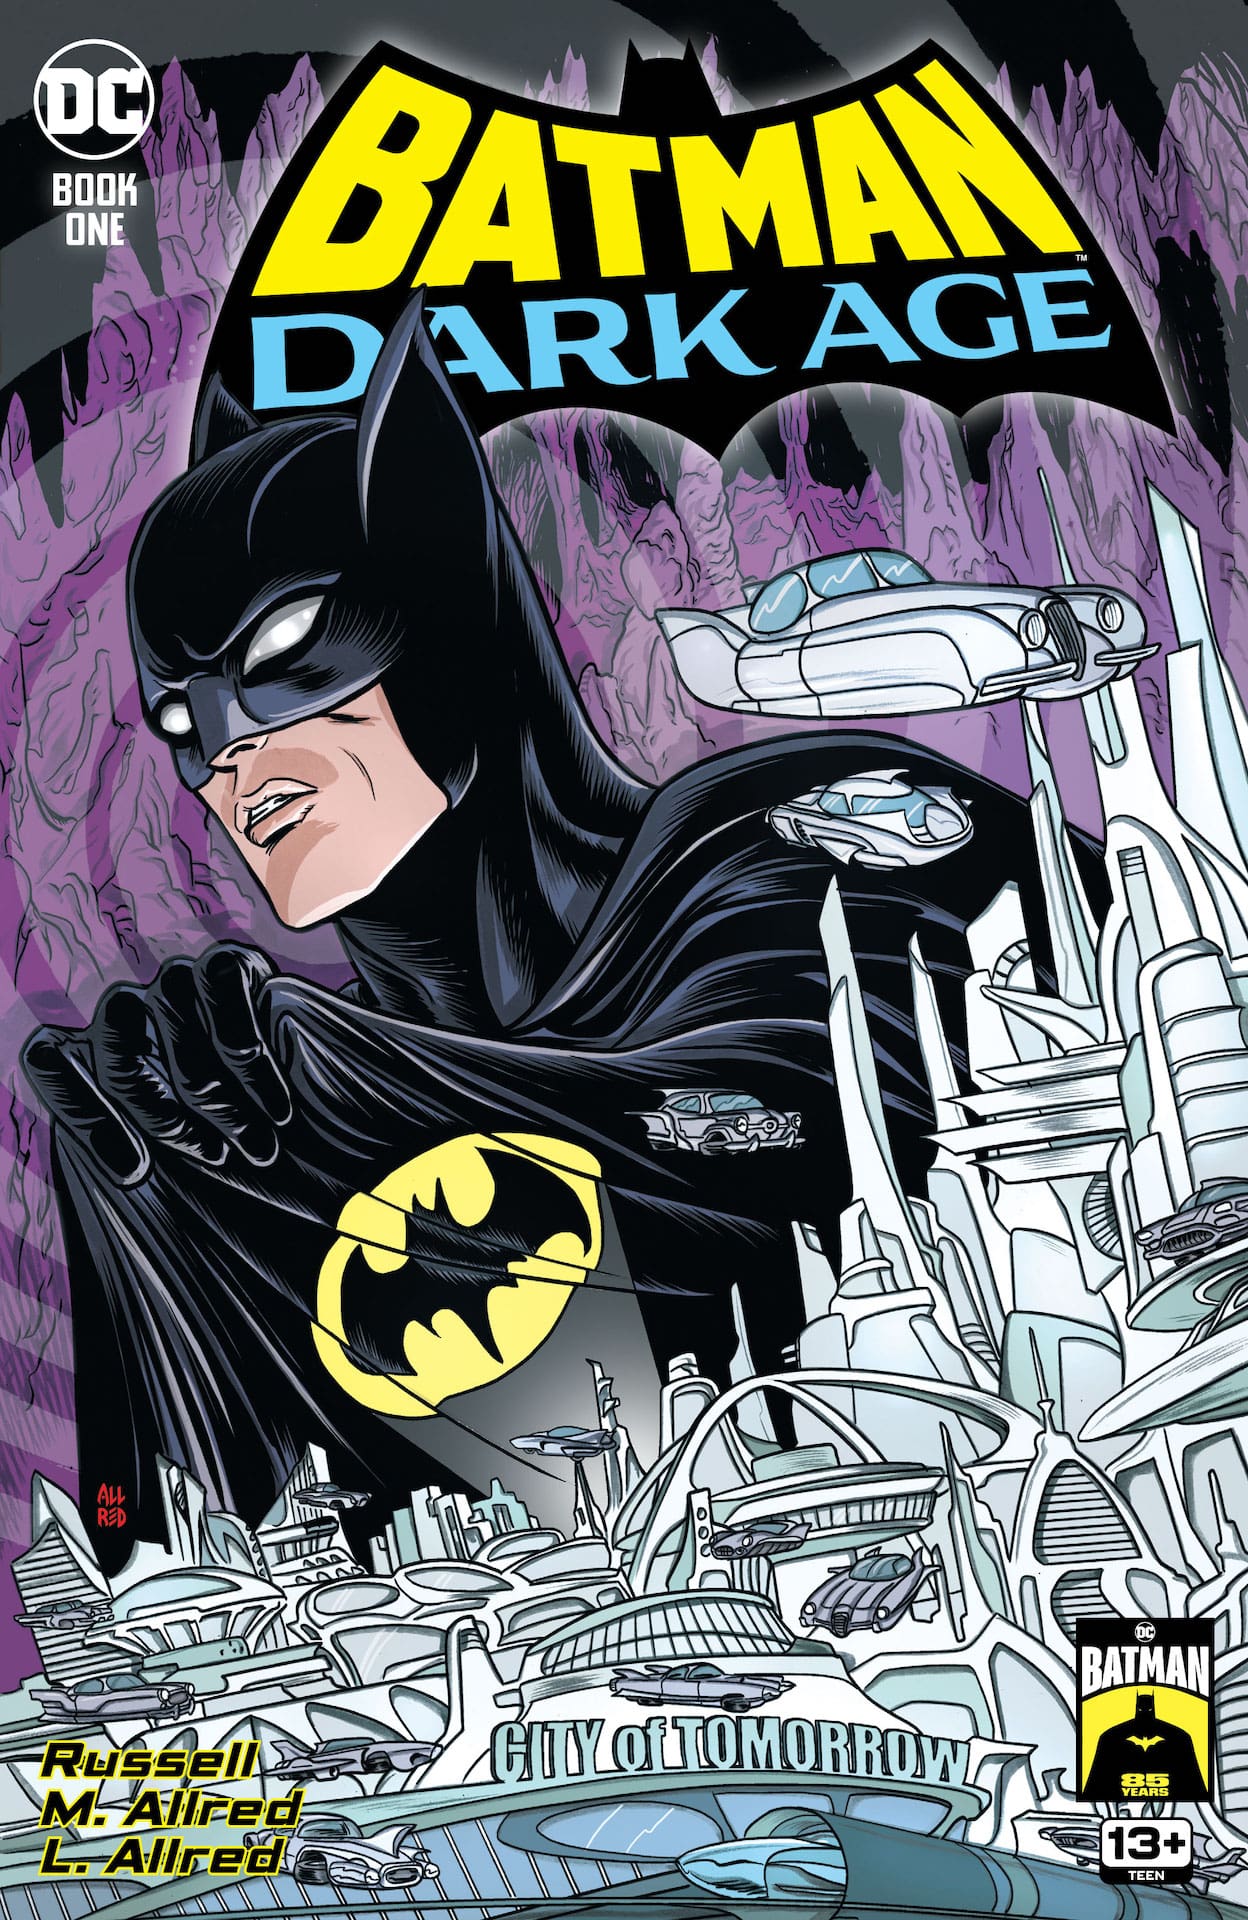 DC Preview: Batman: Dark Age #1